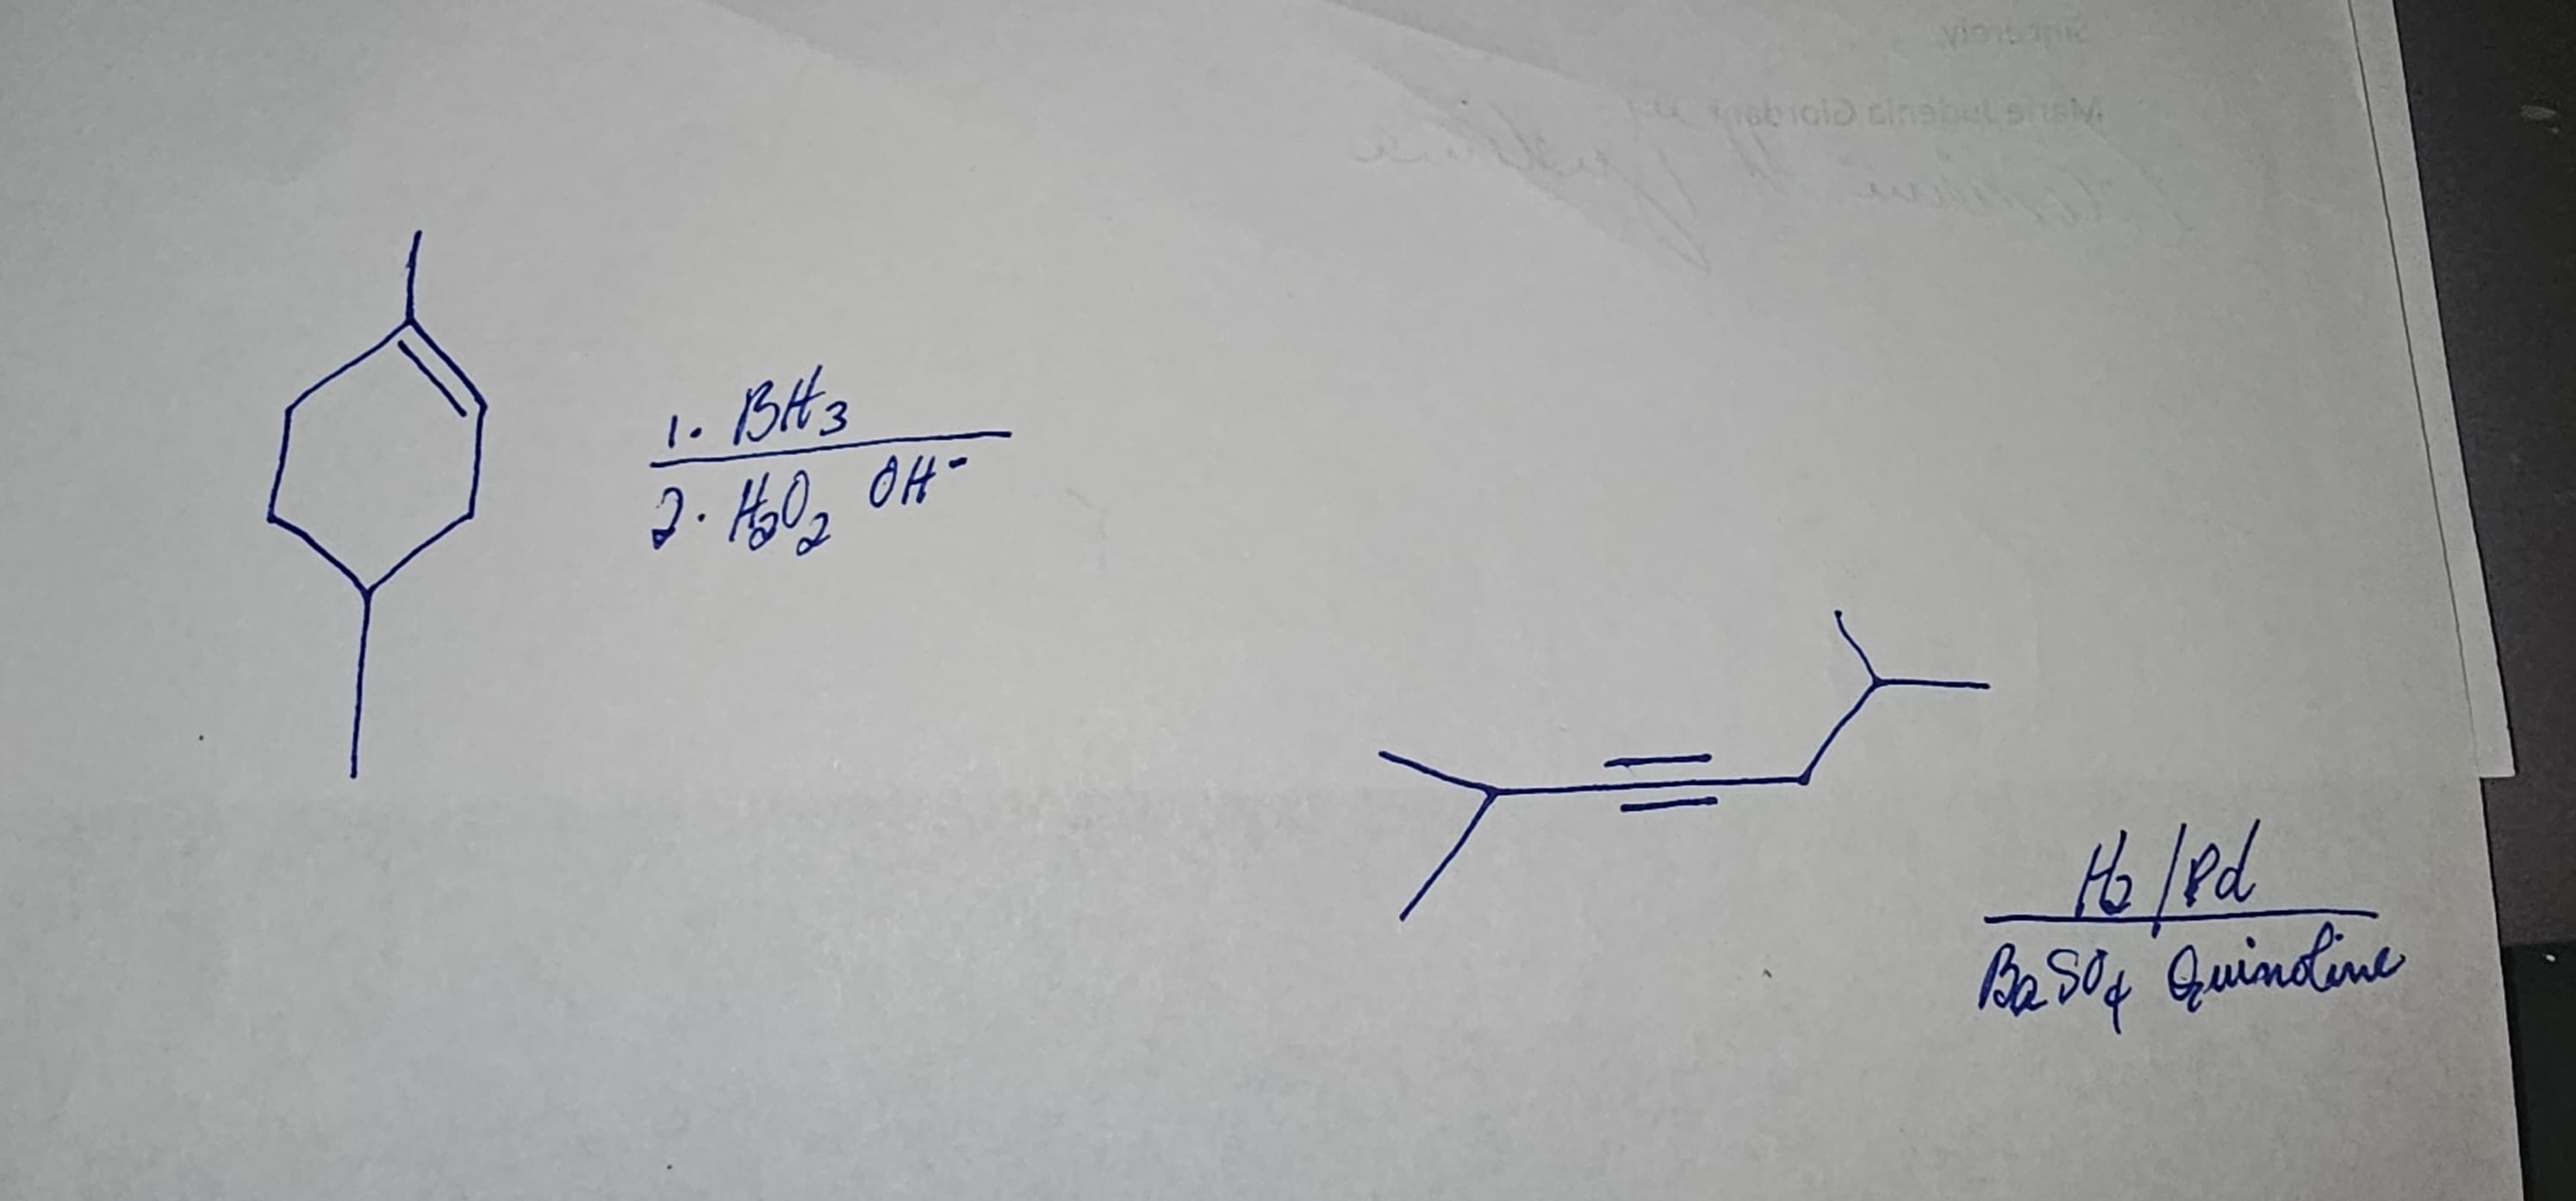 1. BH 3
2.1₂02₂ OH-
viotanic
u inobiold cinsbul shsM
H₂/Pd
Ba 50 & Quinoline